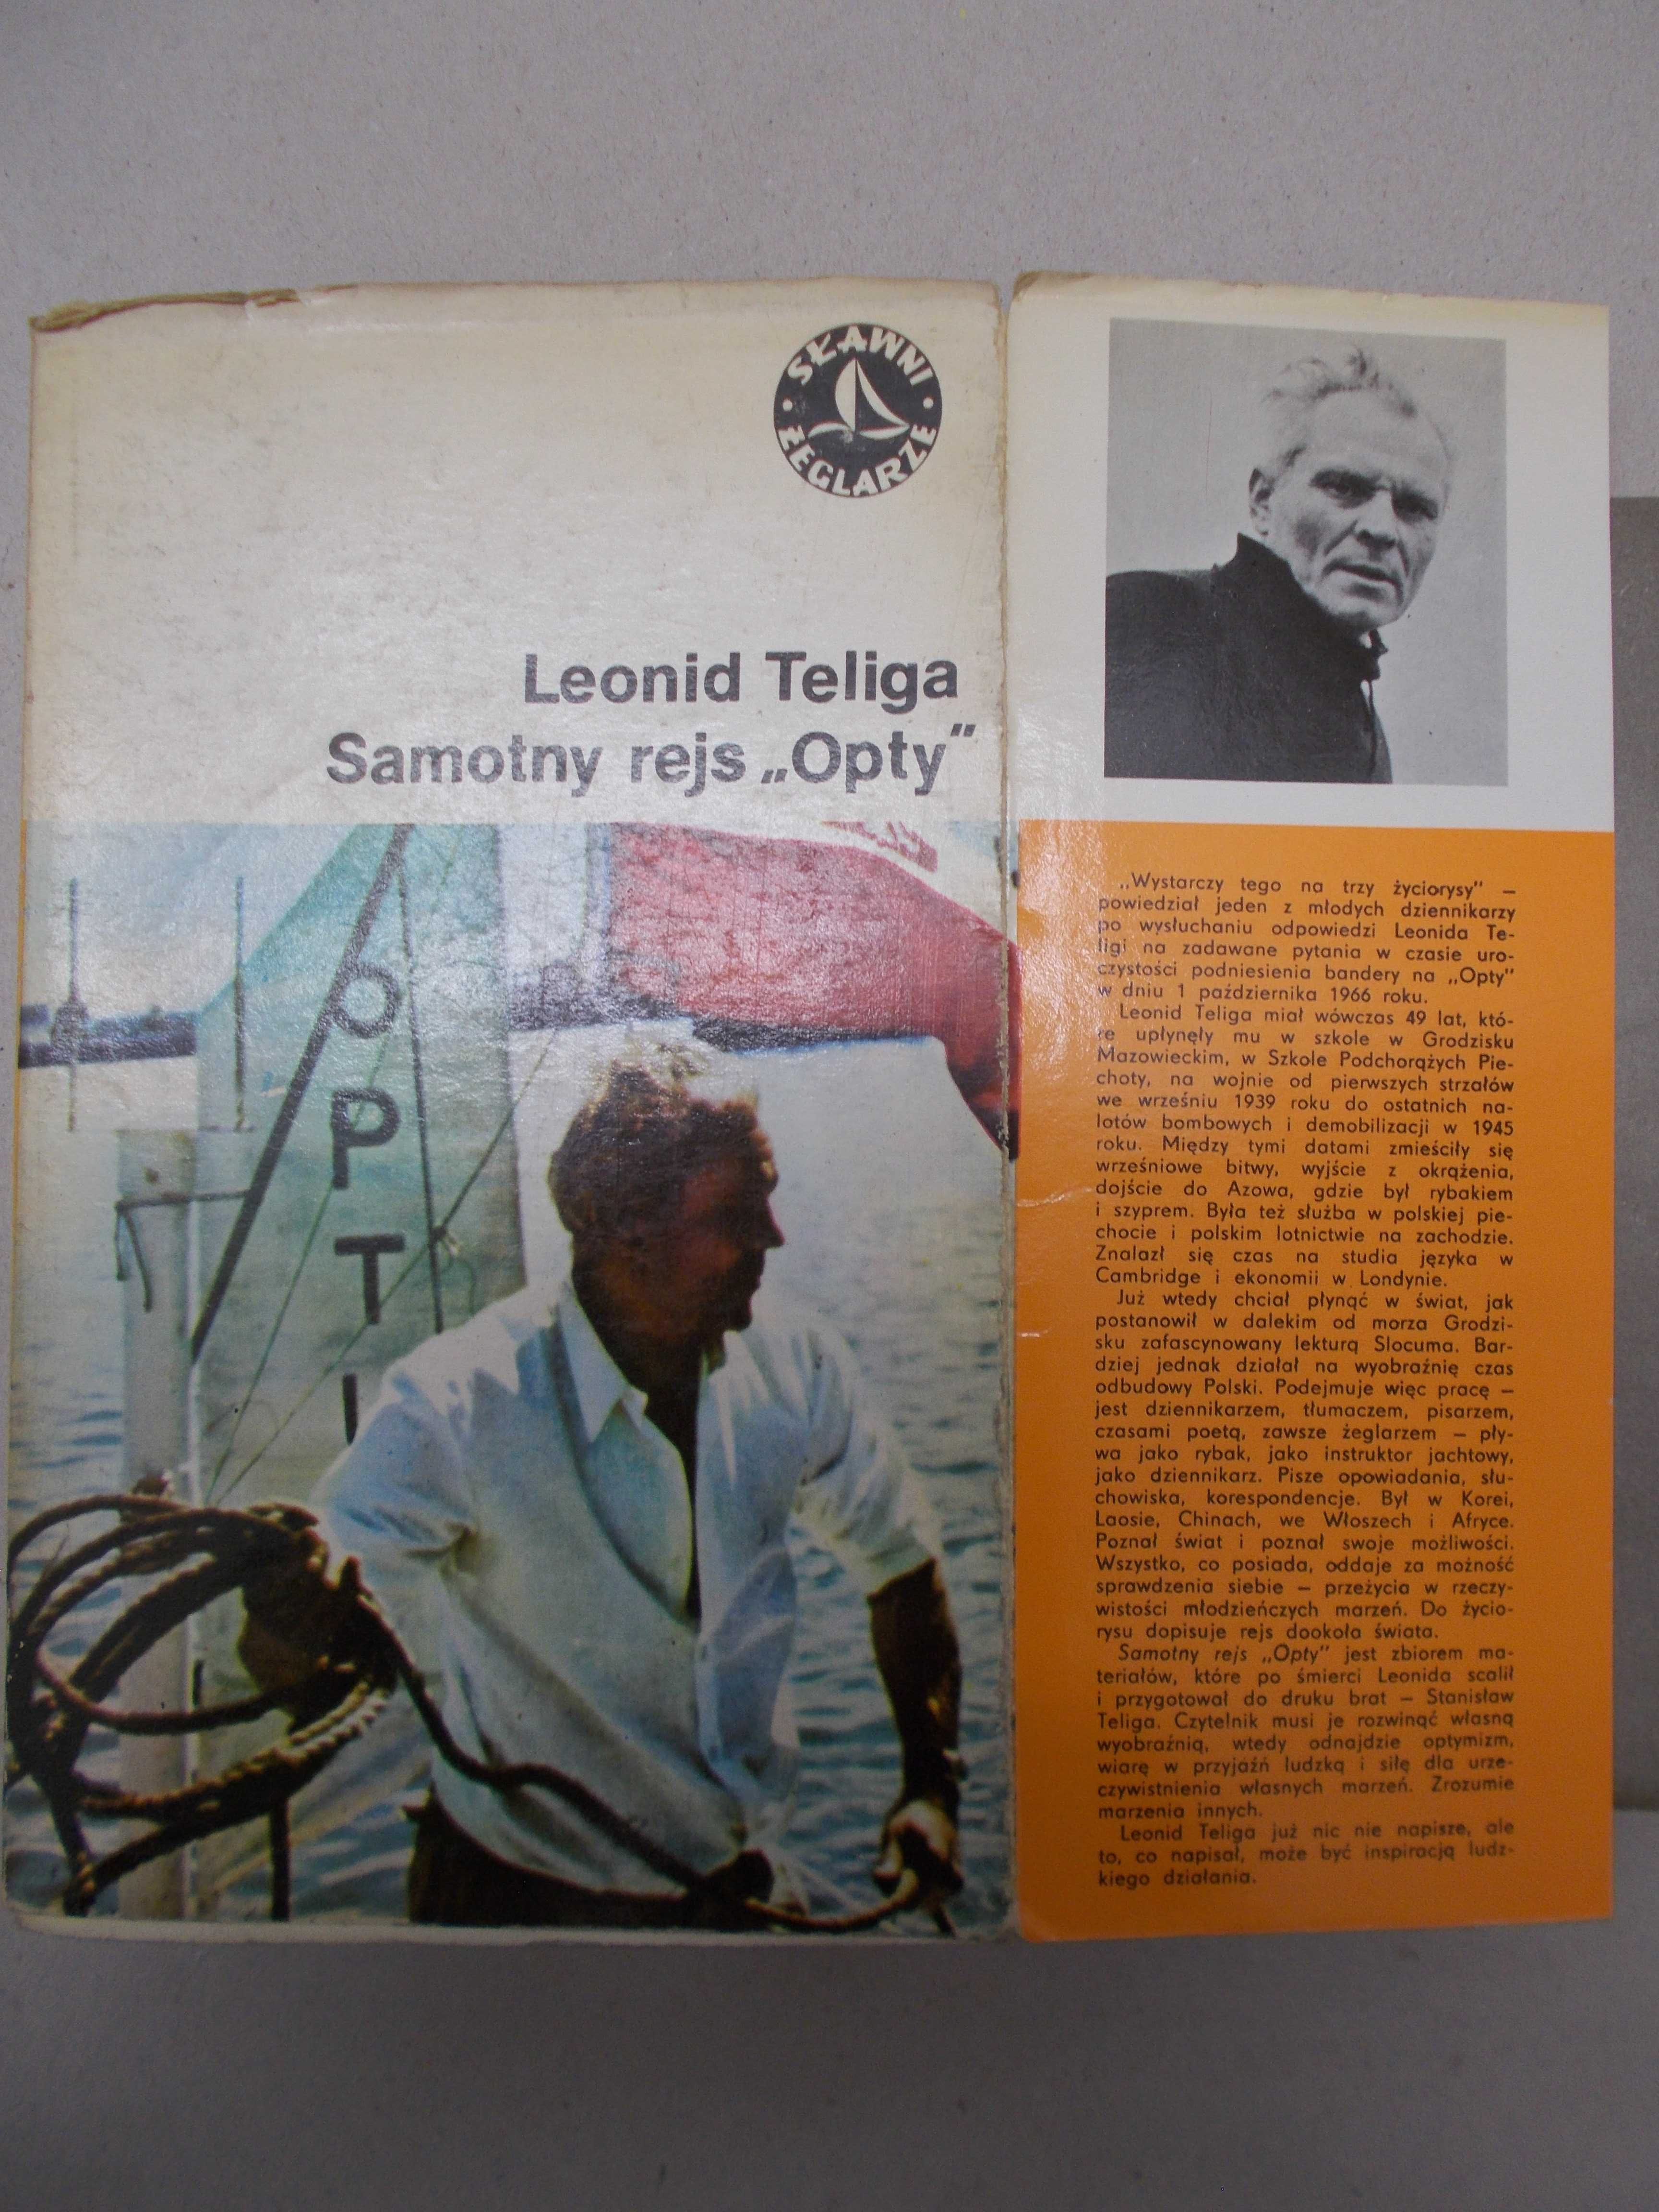 Leonid Teliga - Samotny rejs Opty - żeglarstwo polskie